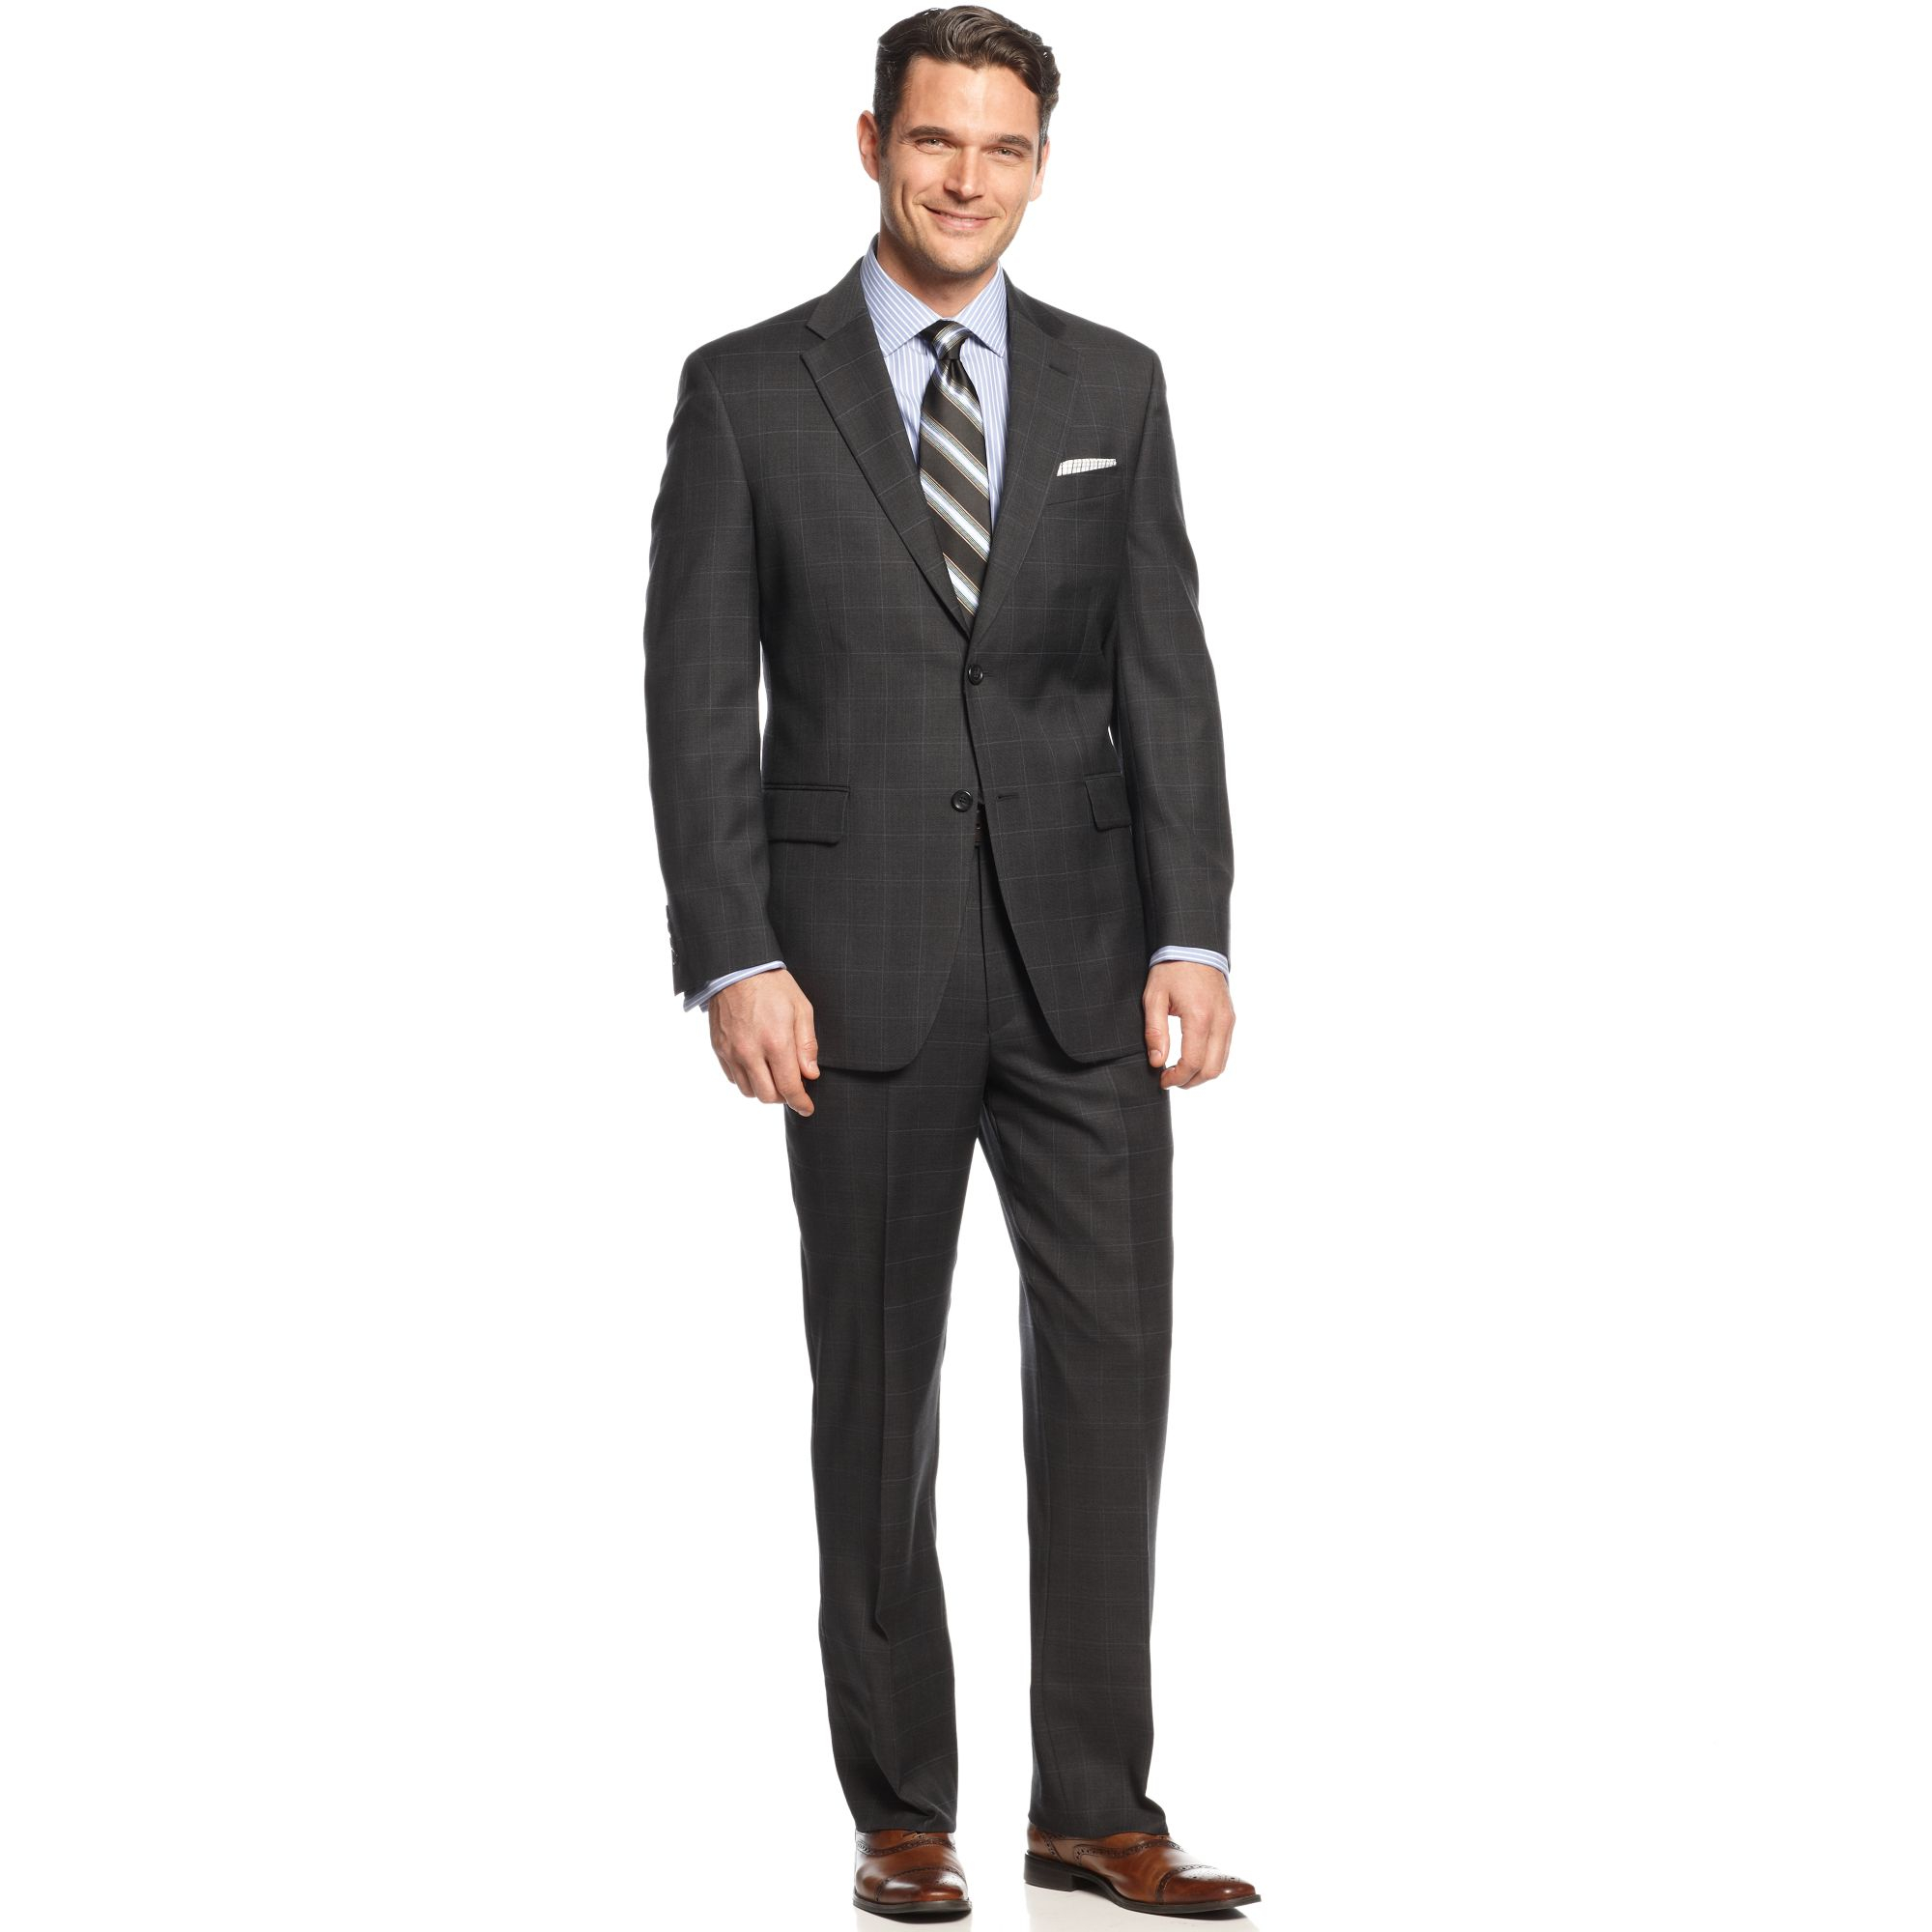 Lyst - Jones New York Suit Charcoal Plaid in Gray for Men